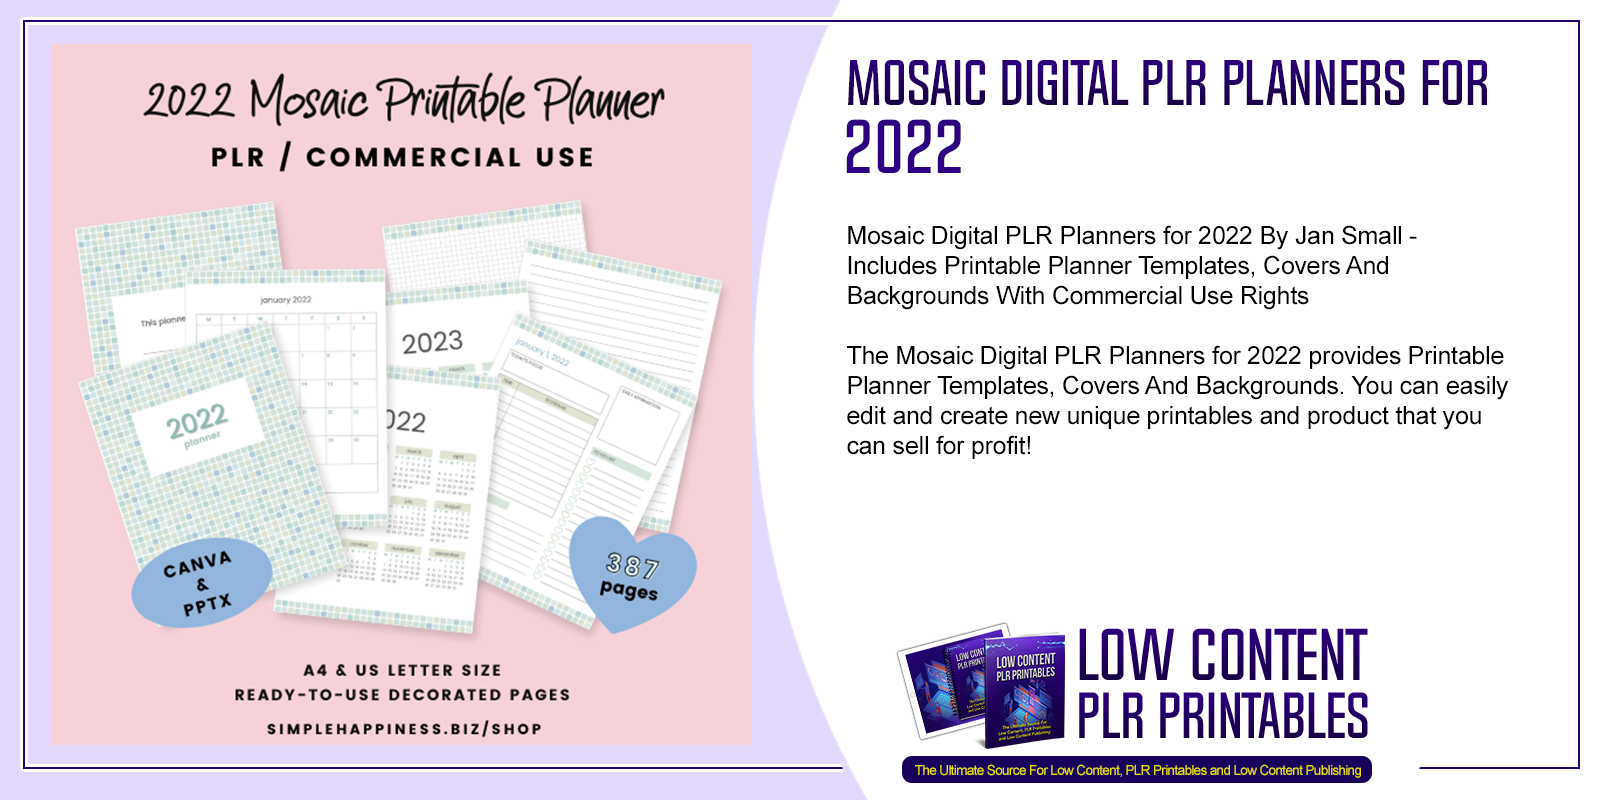 Mosaic Digital PLR Planners for 2022